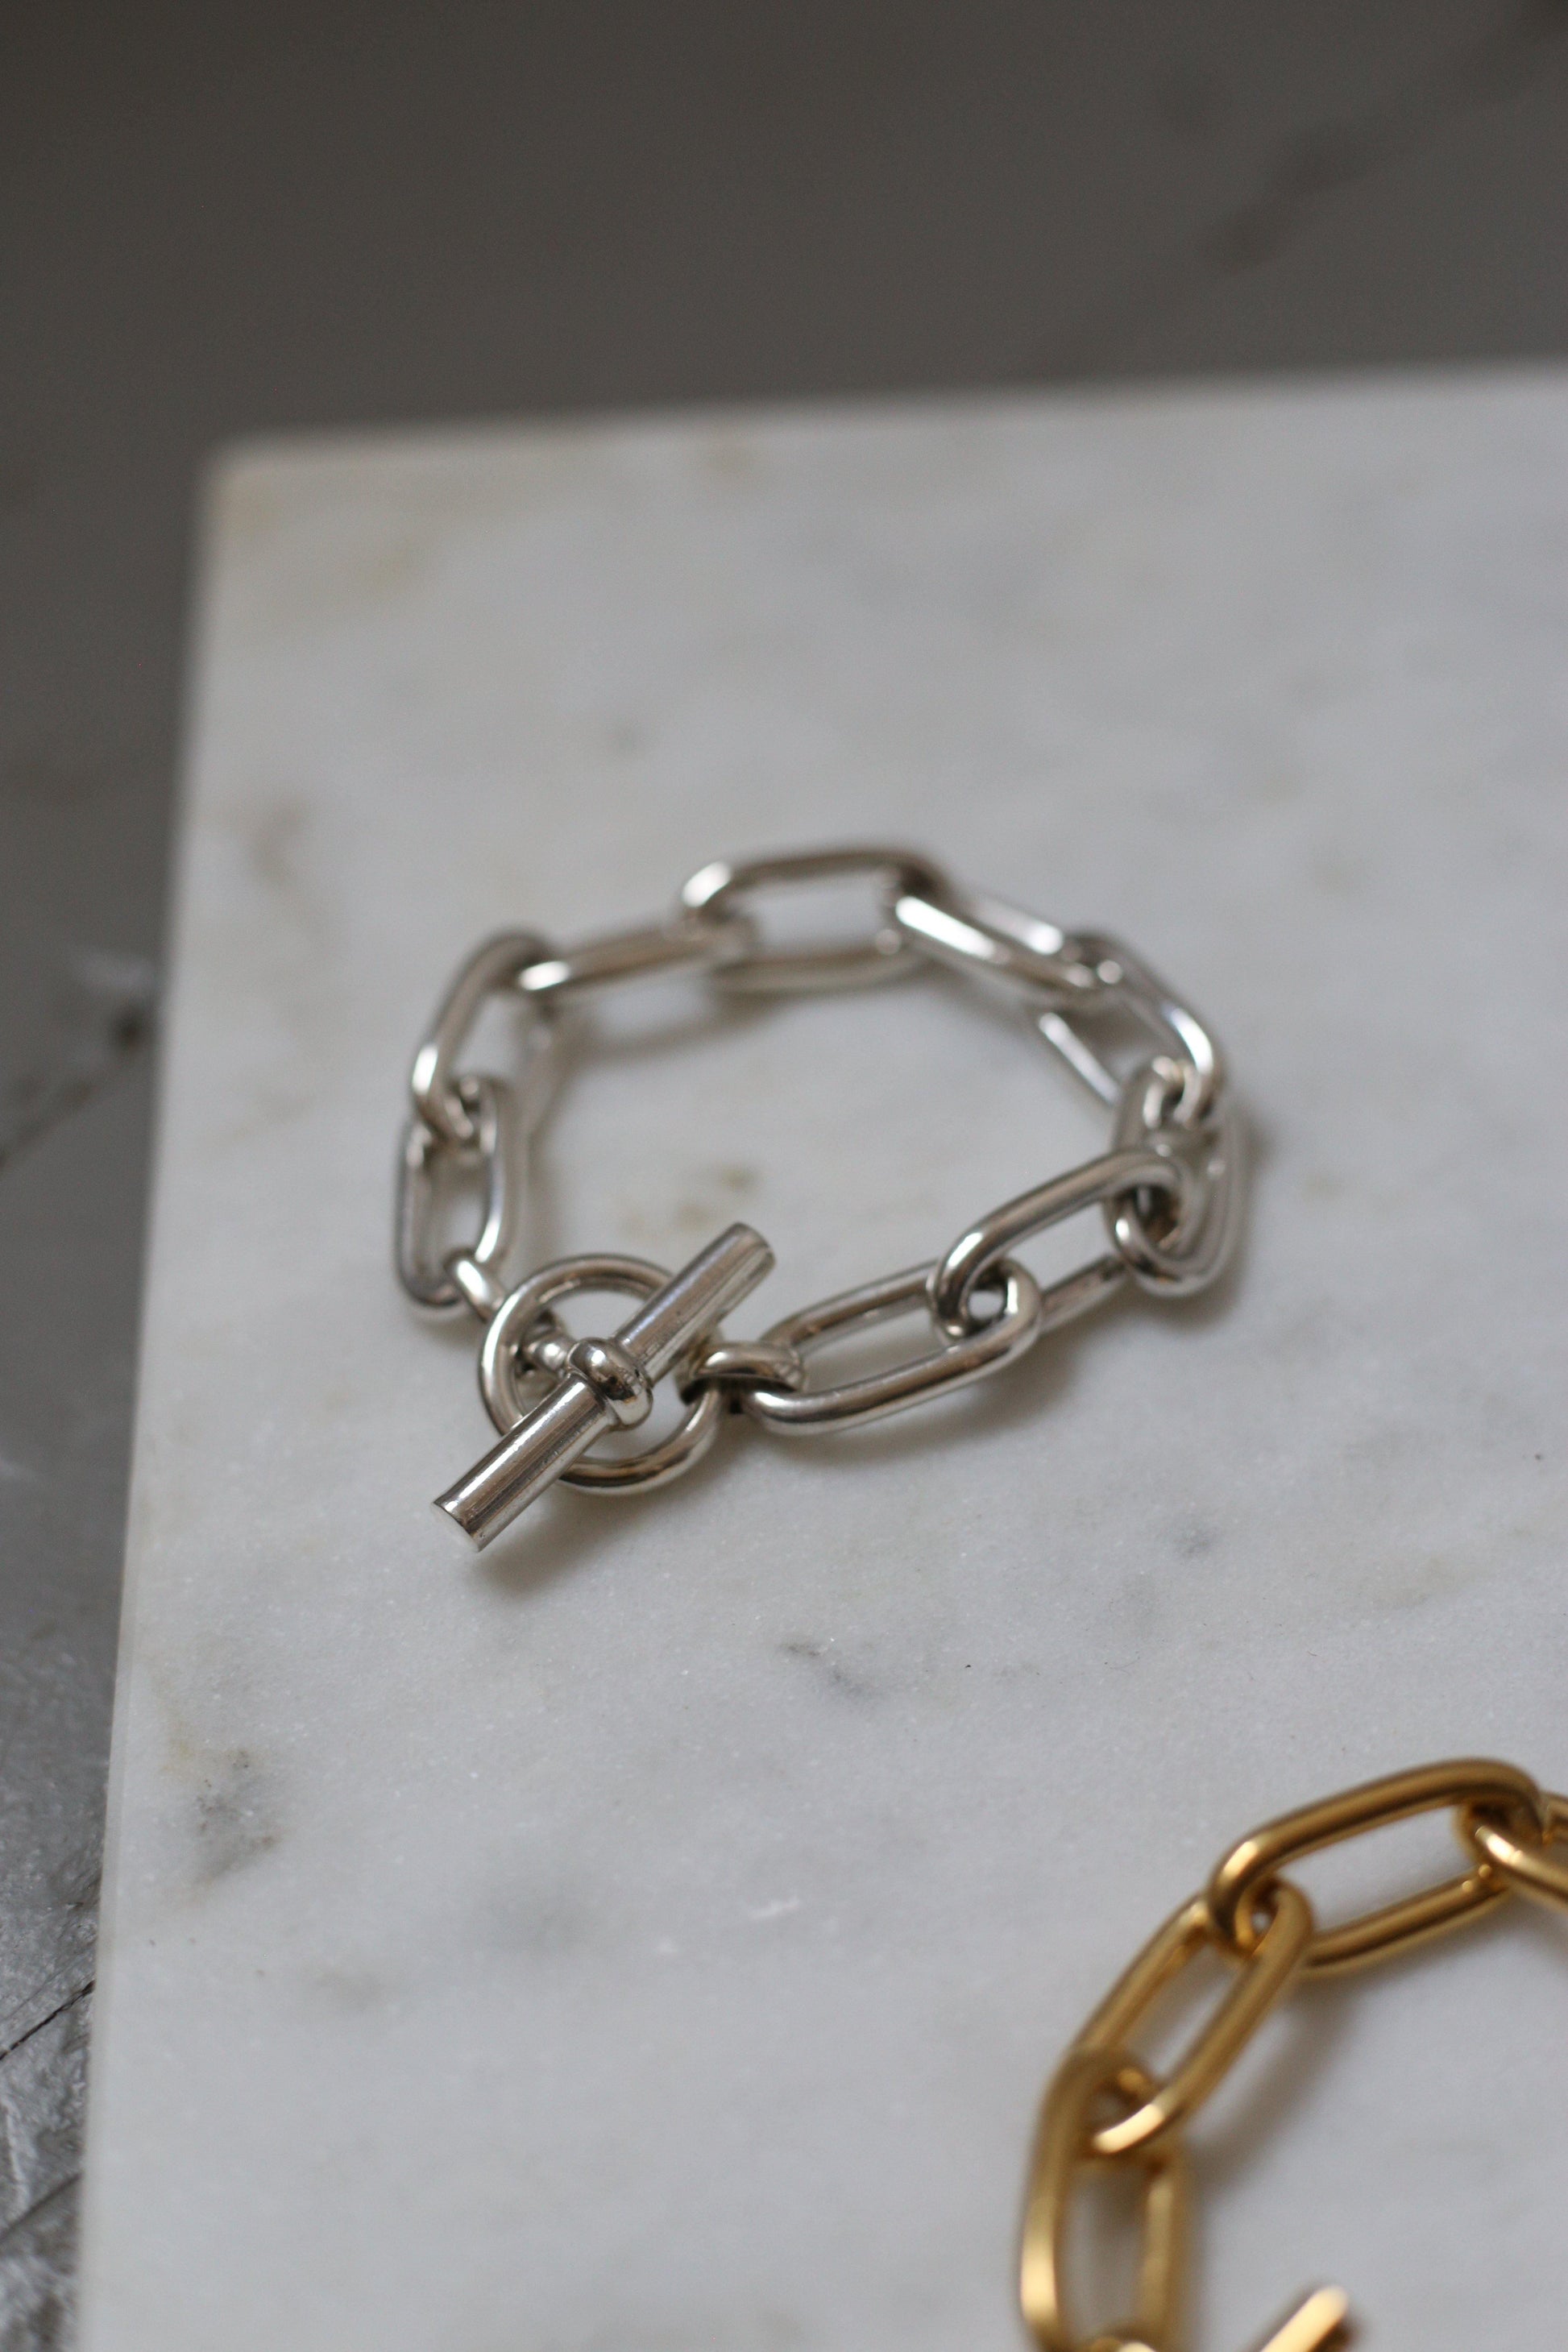 tilly sveaas silver medium oval linked bracelet